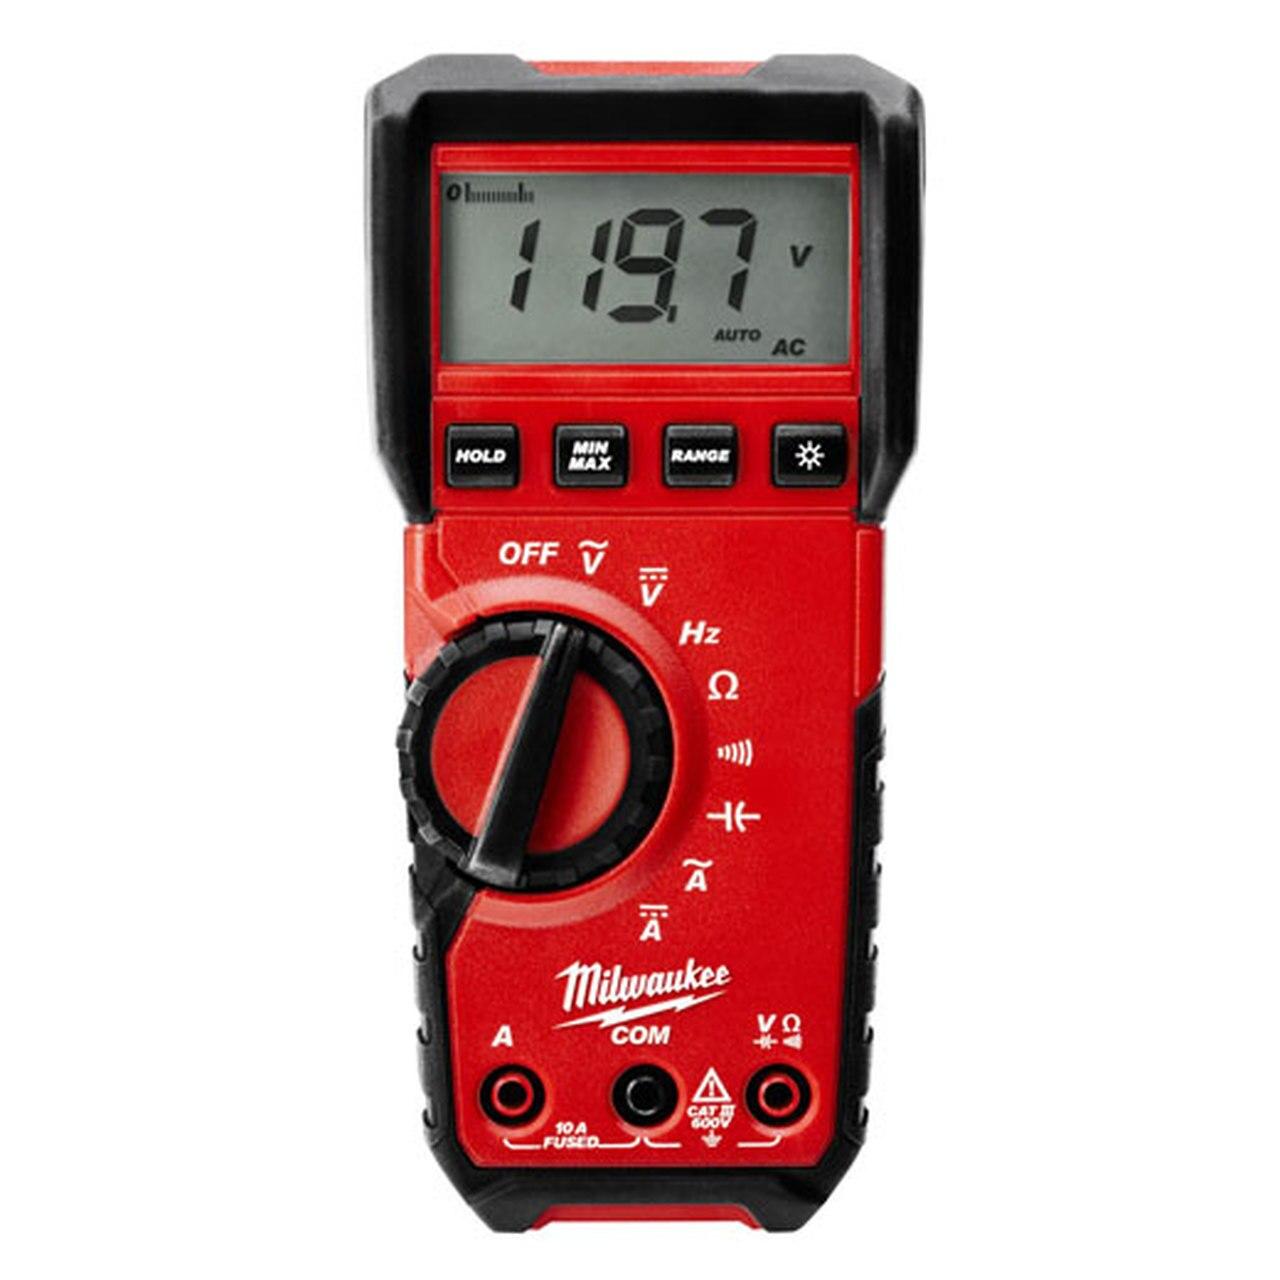 MILWAUKEE 2220-20 Kit para electricista profesional